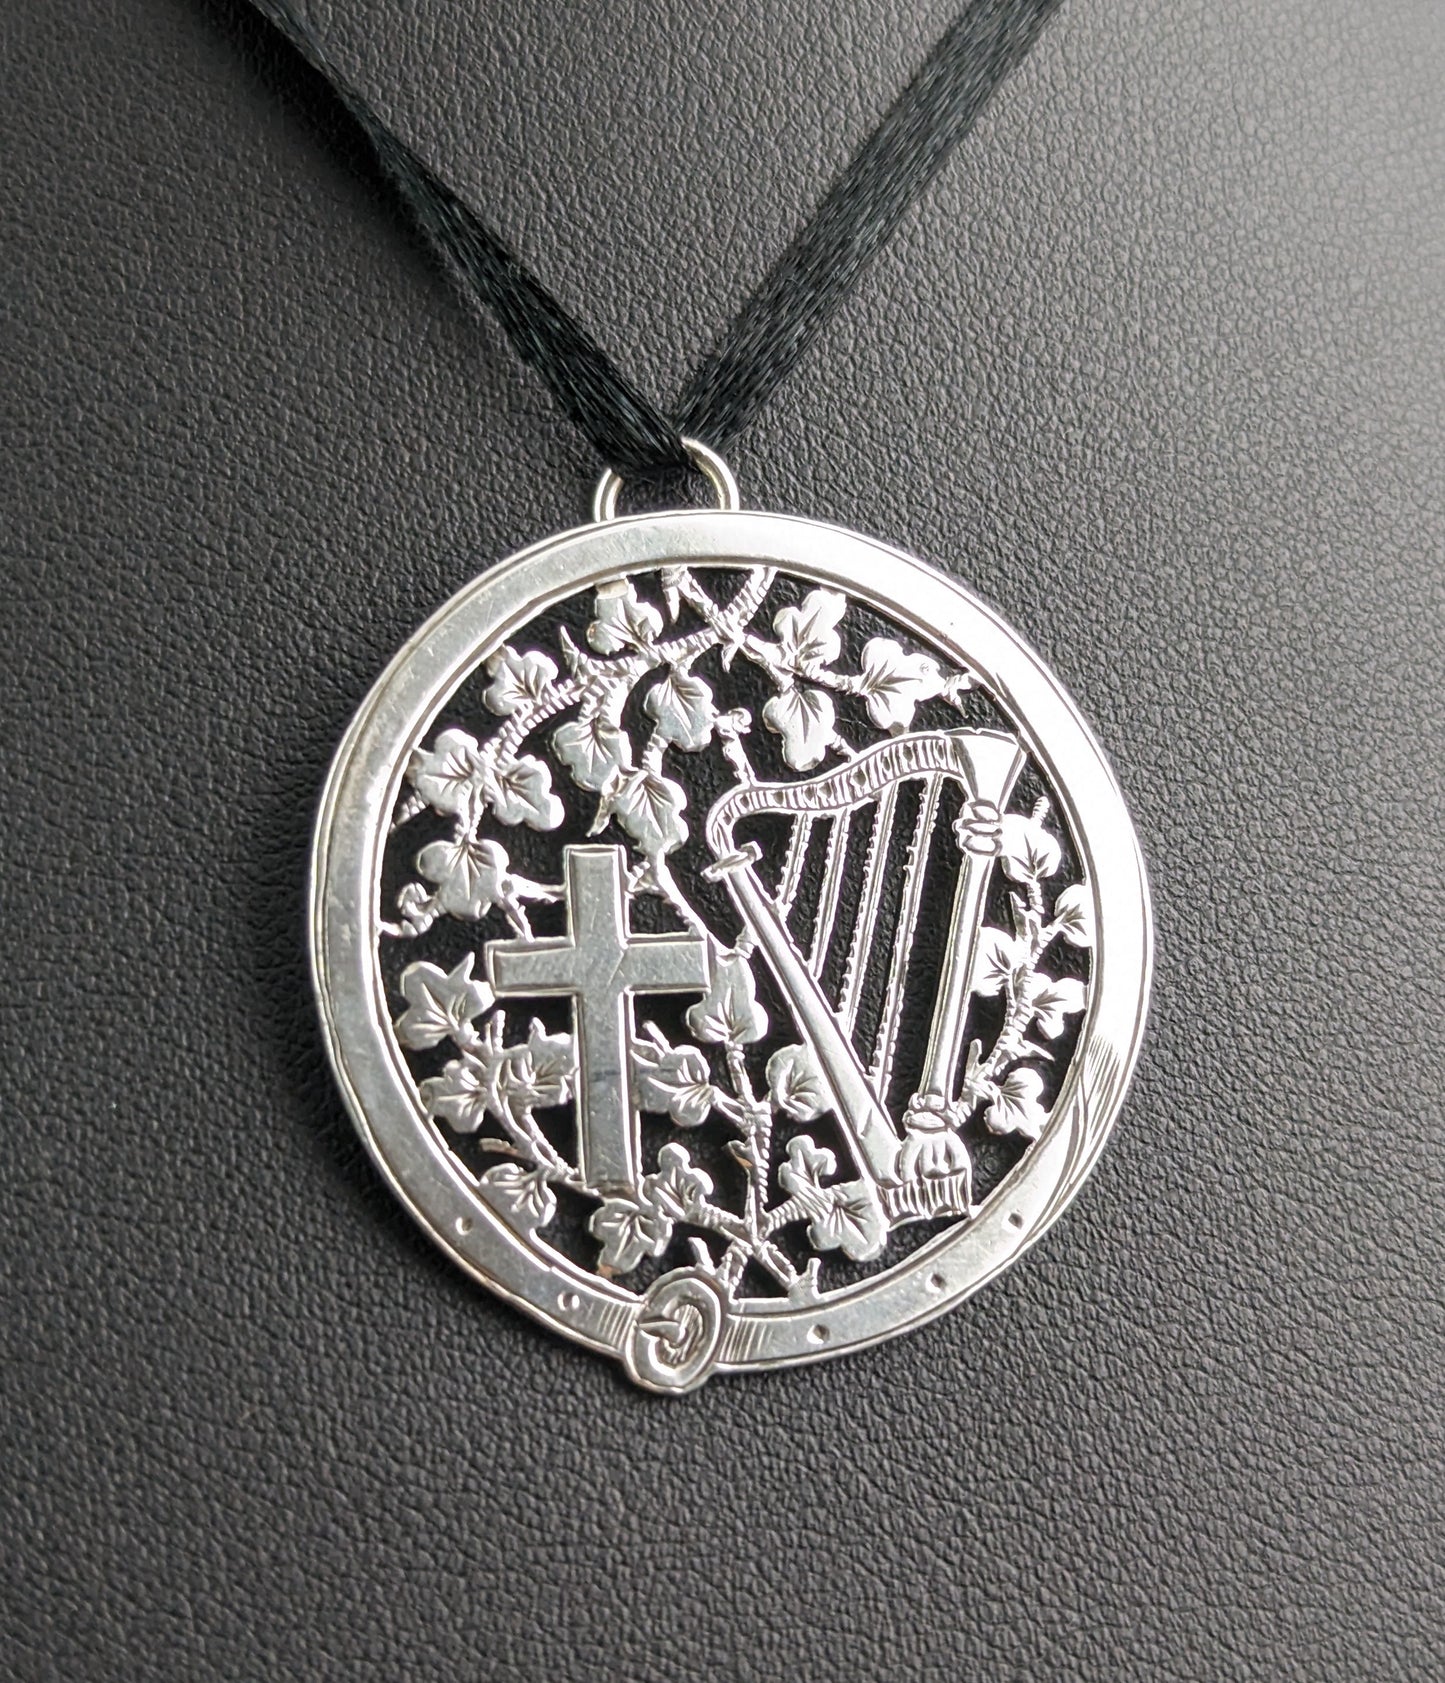 Antique Victorian silver pendant, Harp and Cross